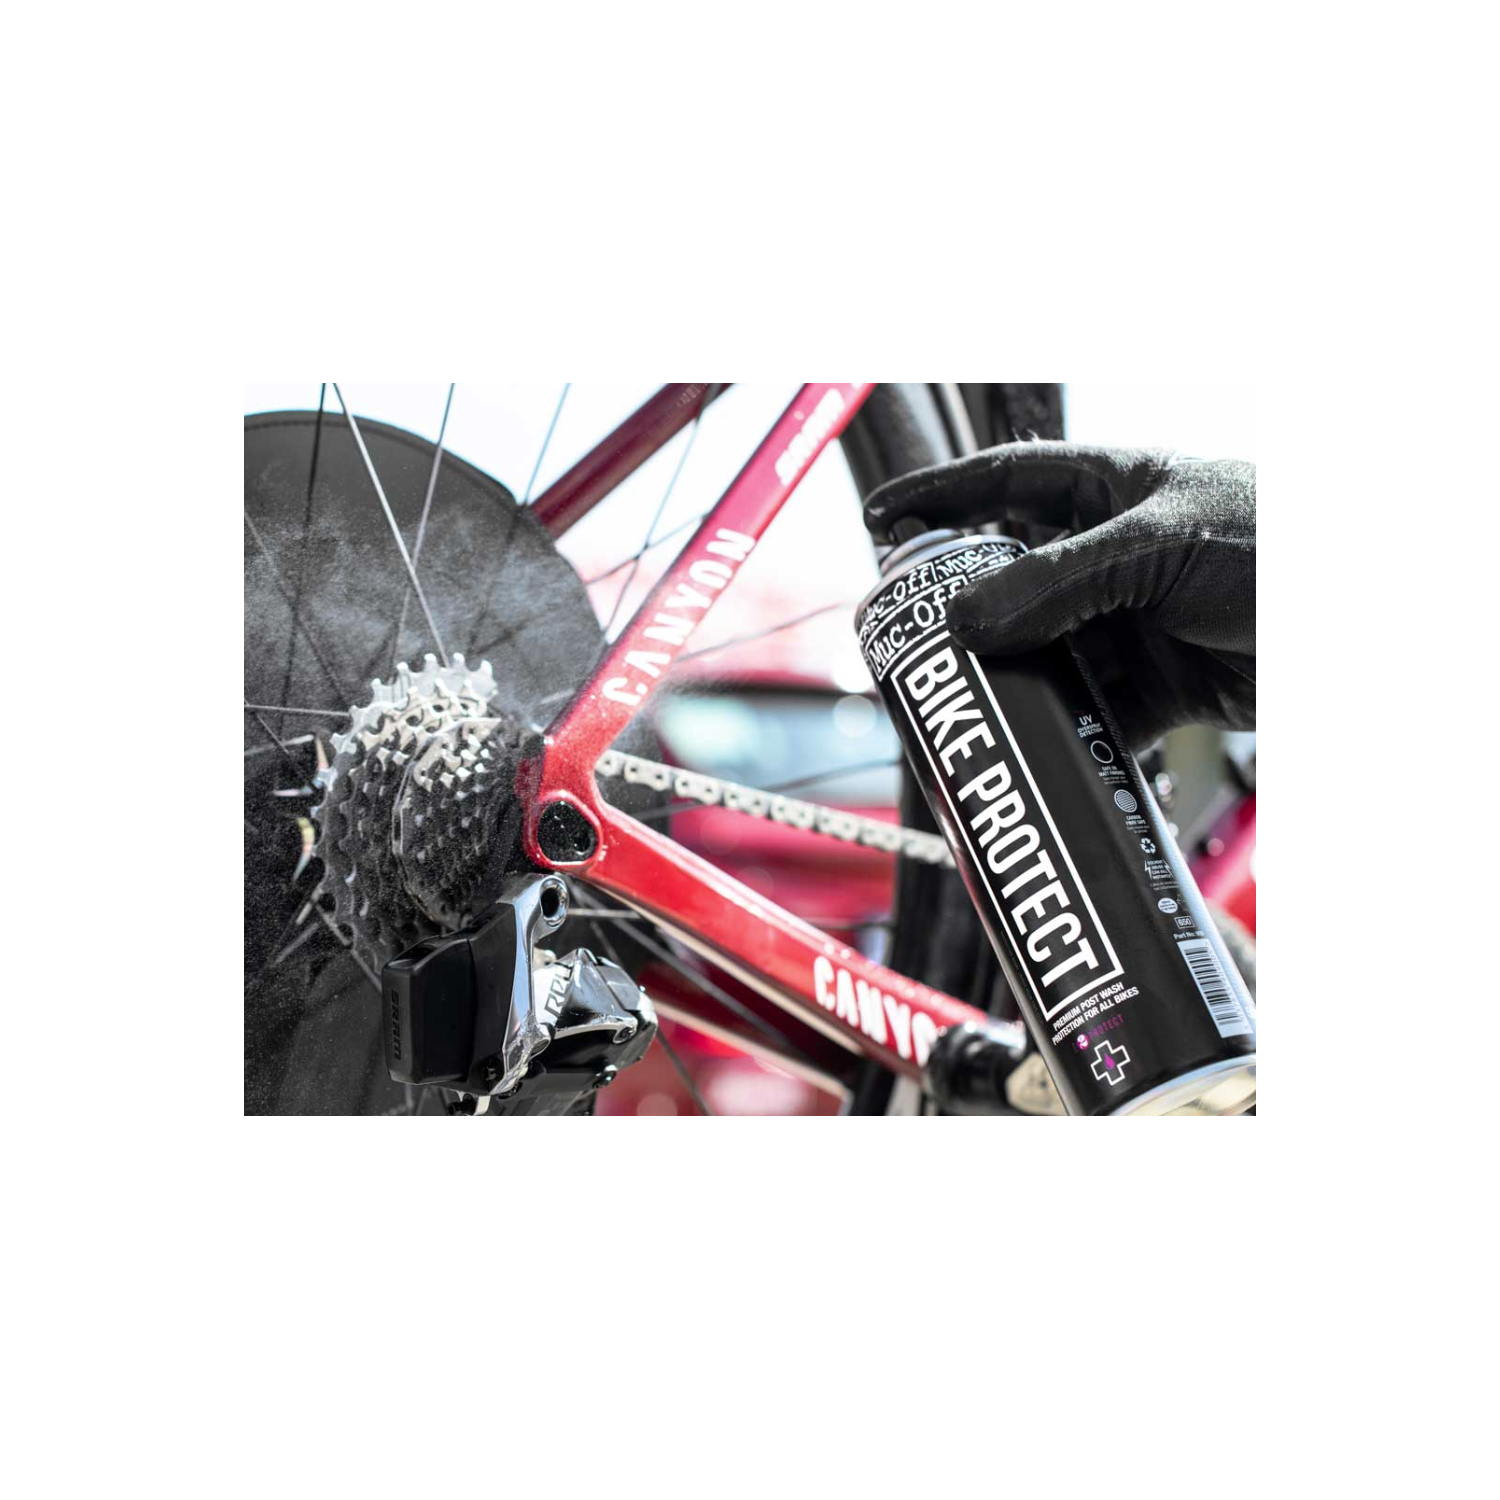 Smar w sprayu Muc-Off Bike Protect  500 ml